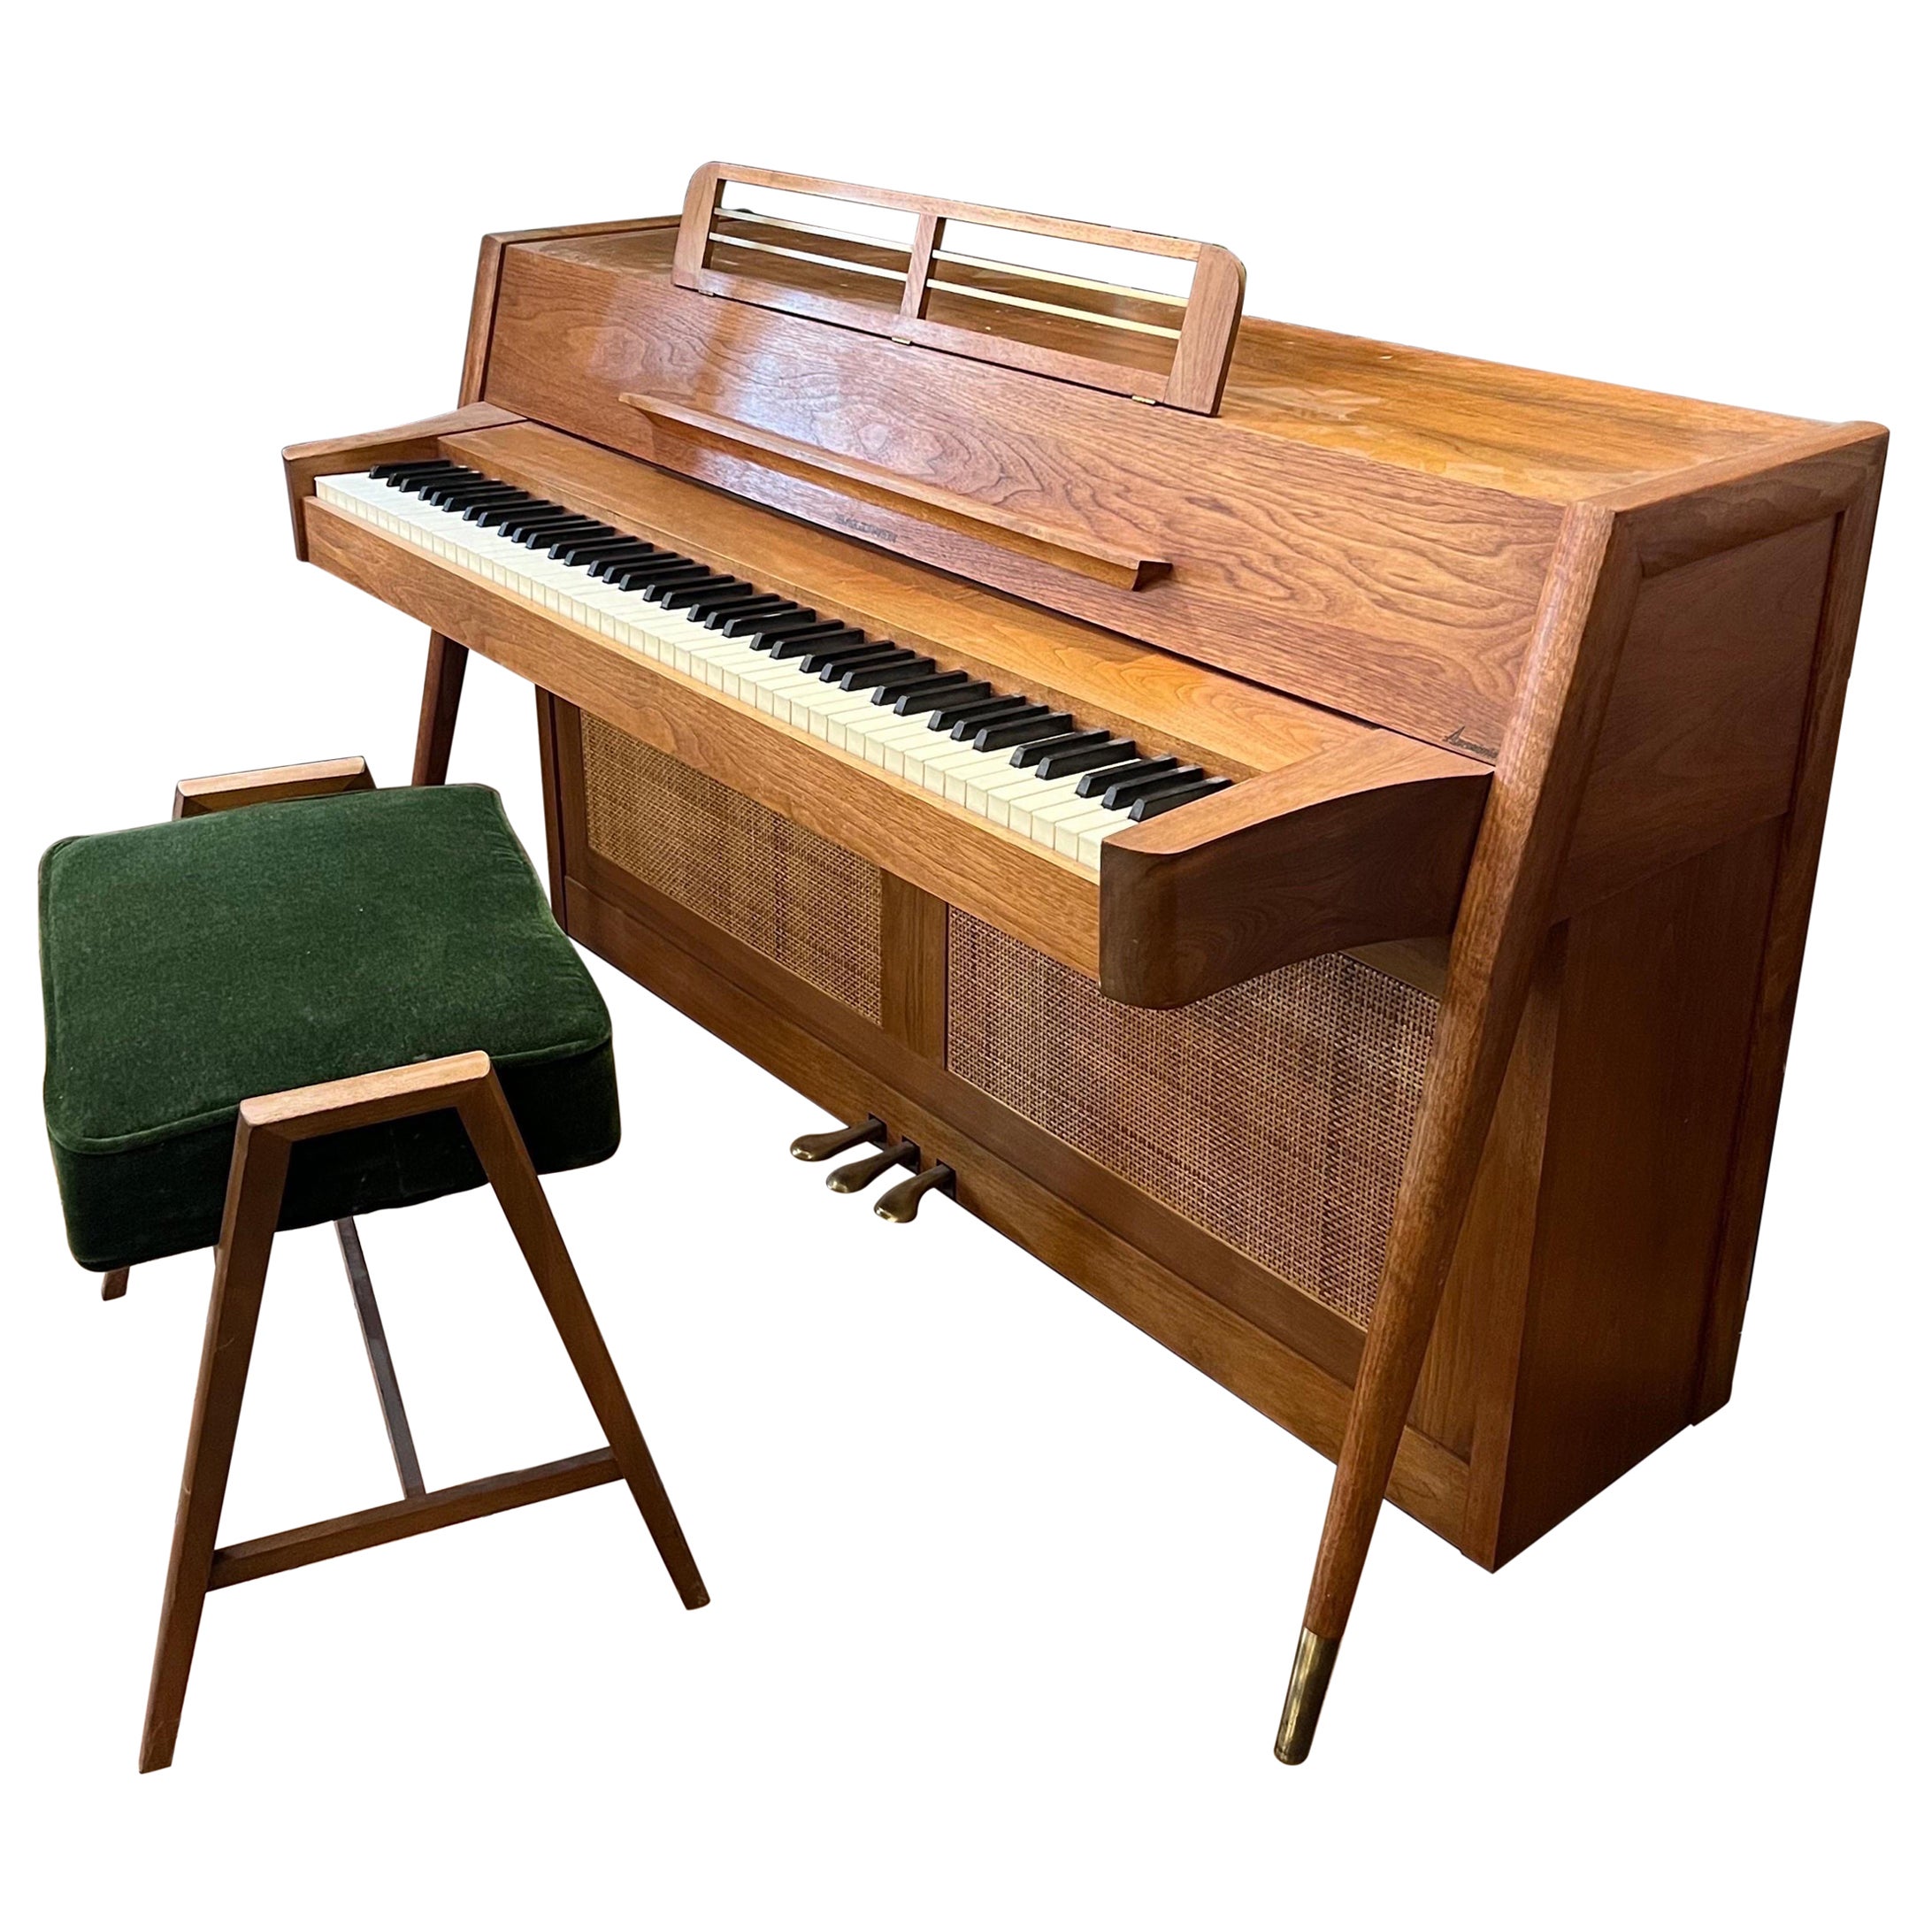 Baldwin acrosonic piano danish modern teak walnut cane mid century Scandinavian 